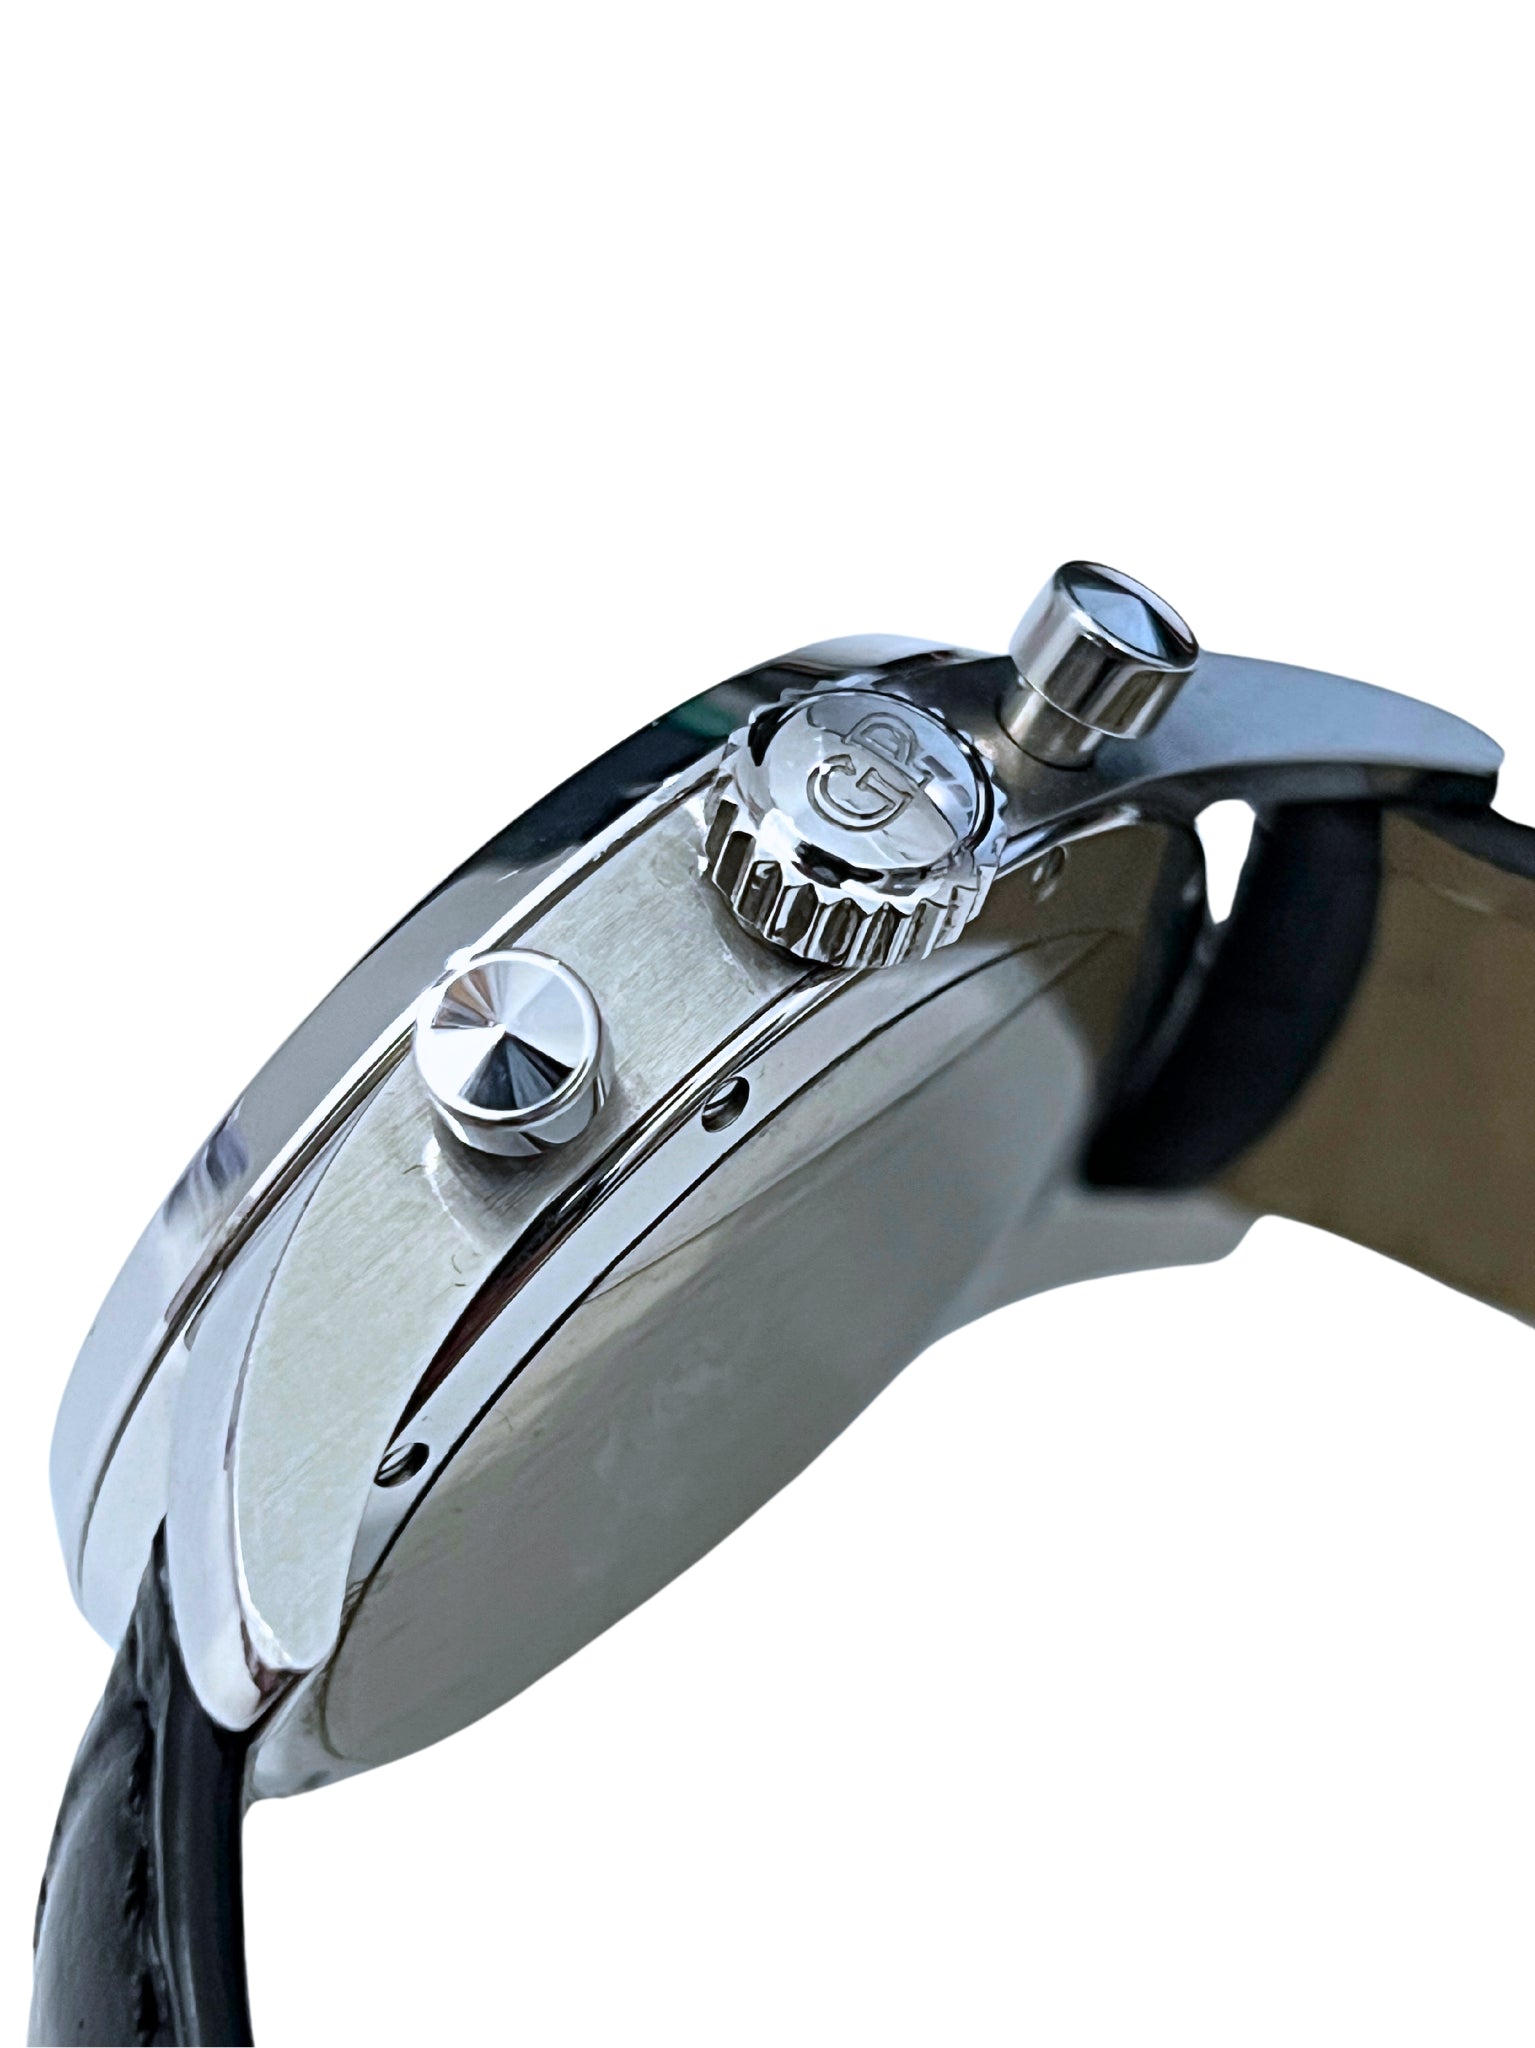 Girard-Perregaux Automatic Chronograph Watch